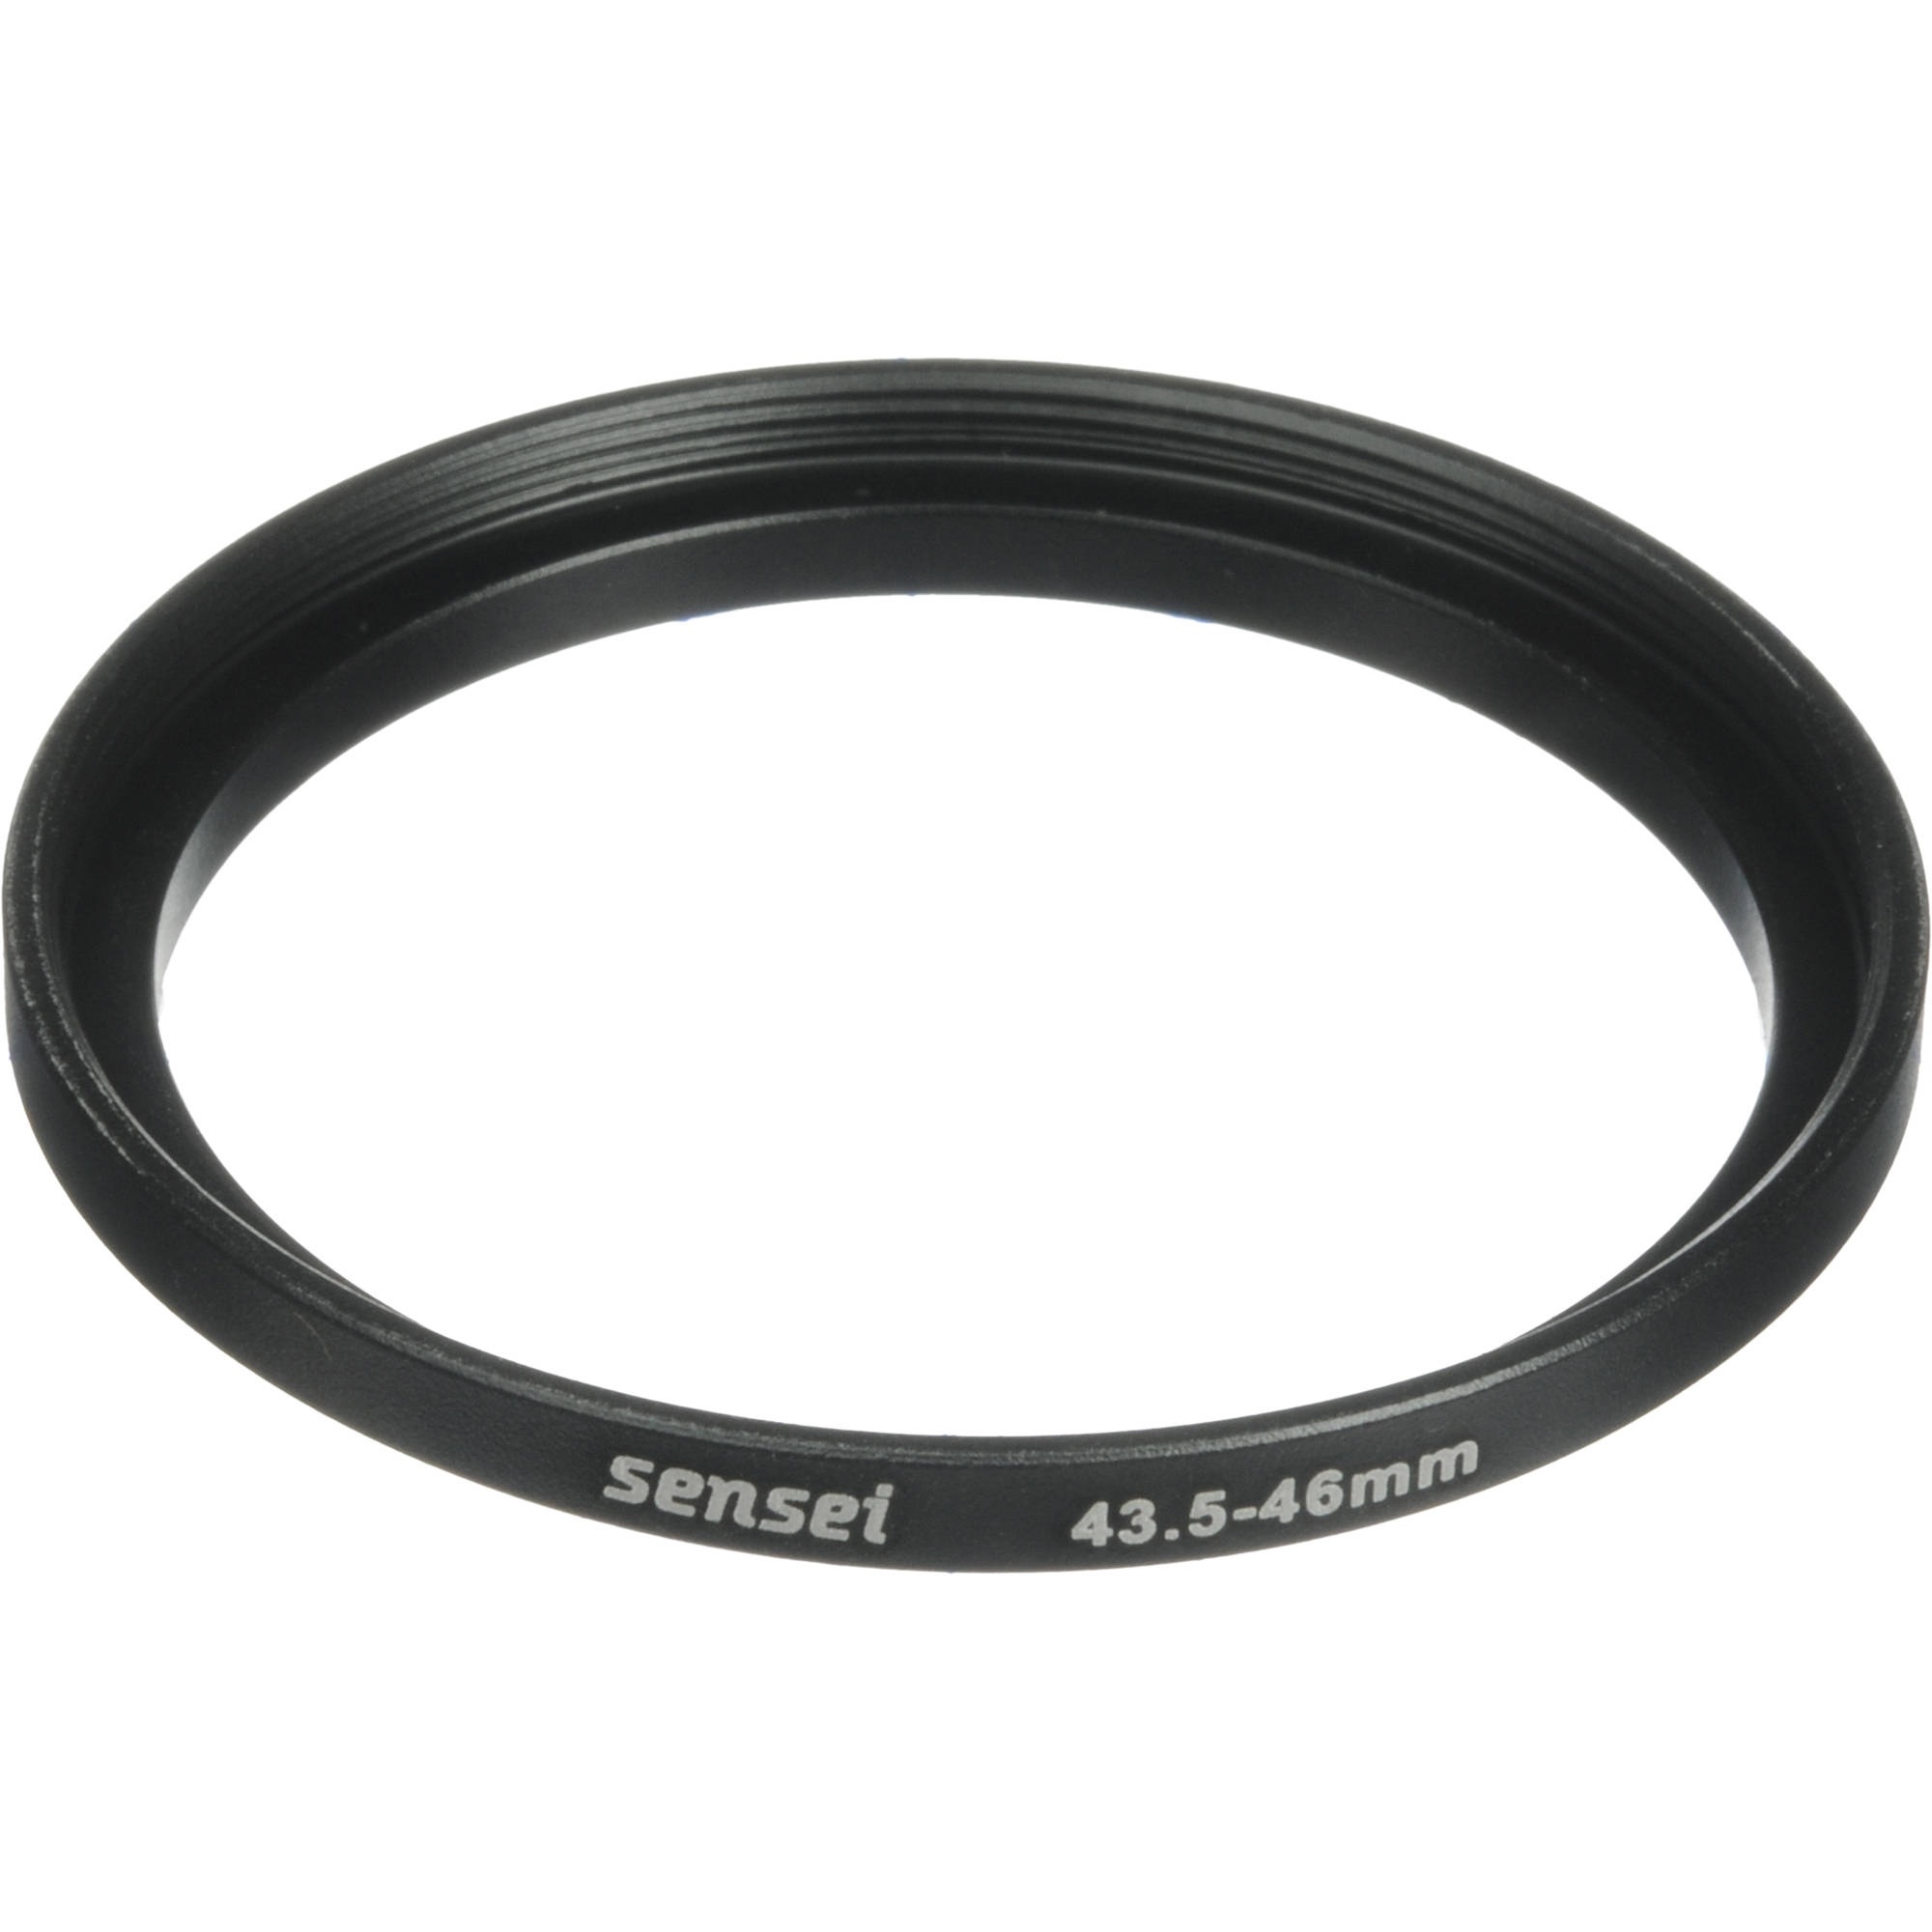 Sensei 43.5-46mm Step-Up Ring